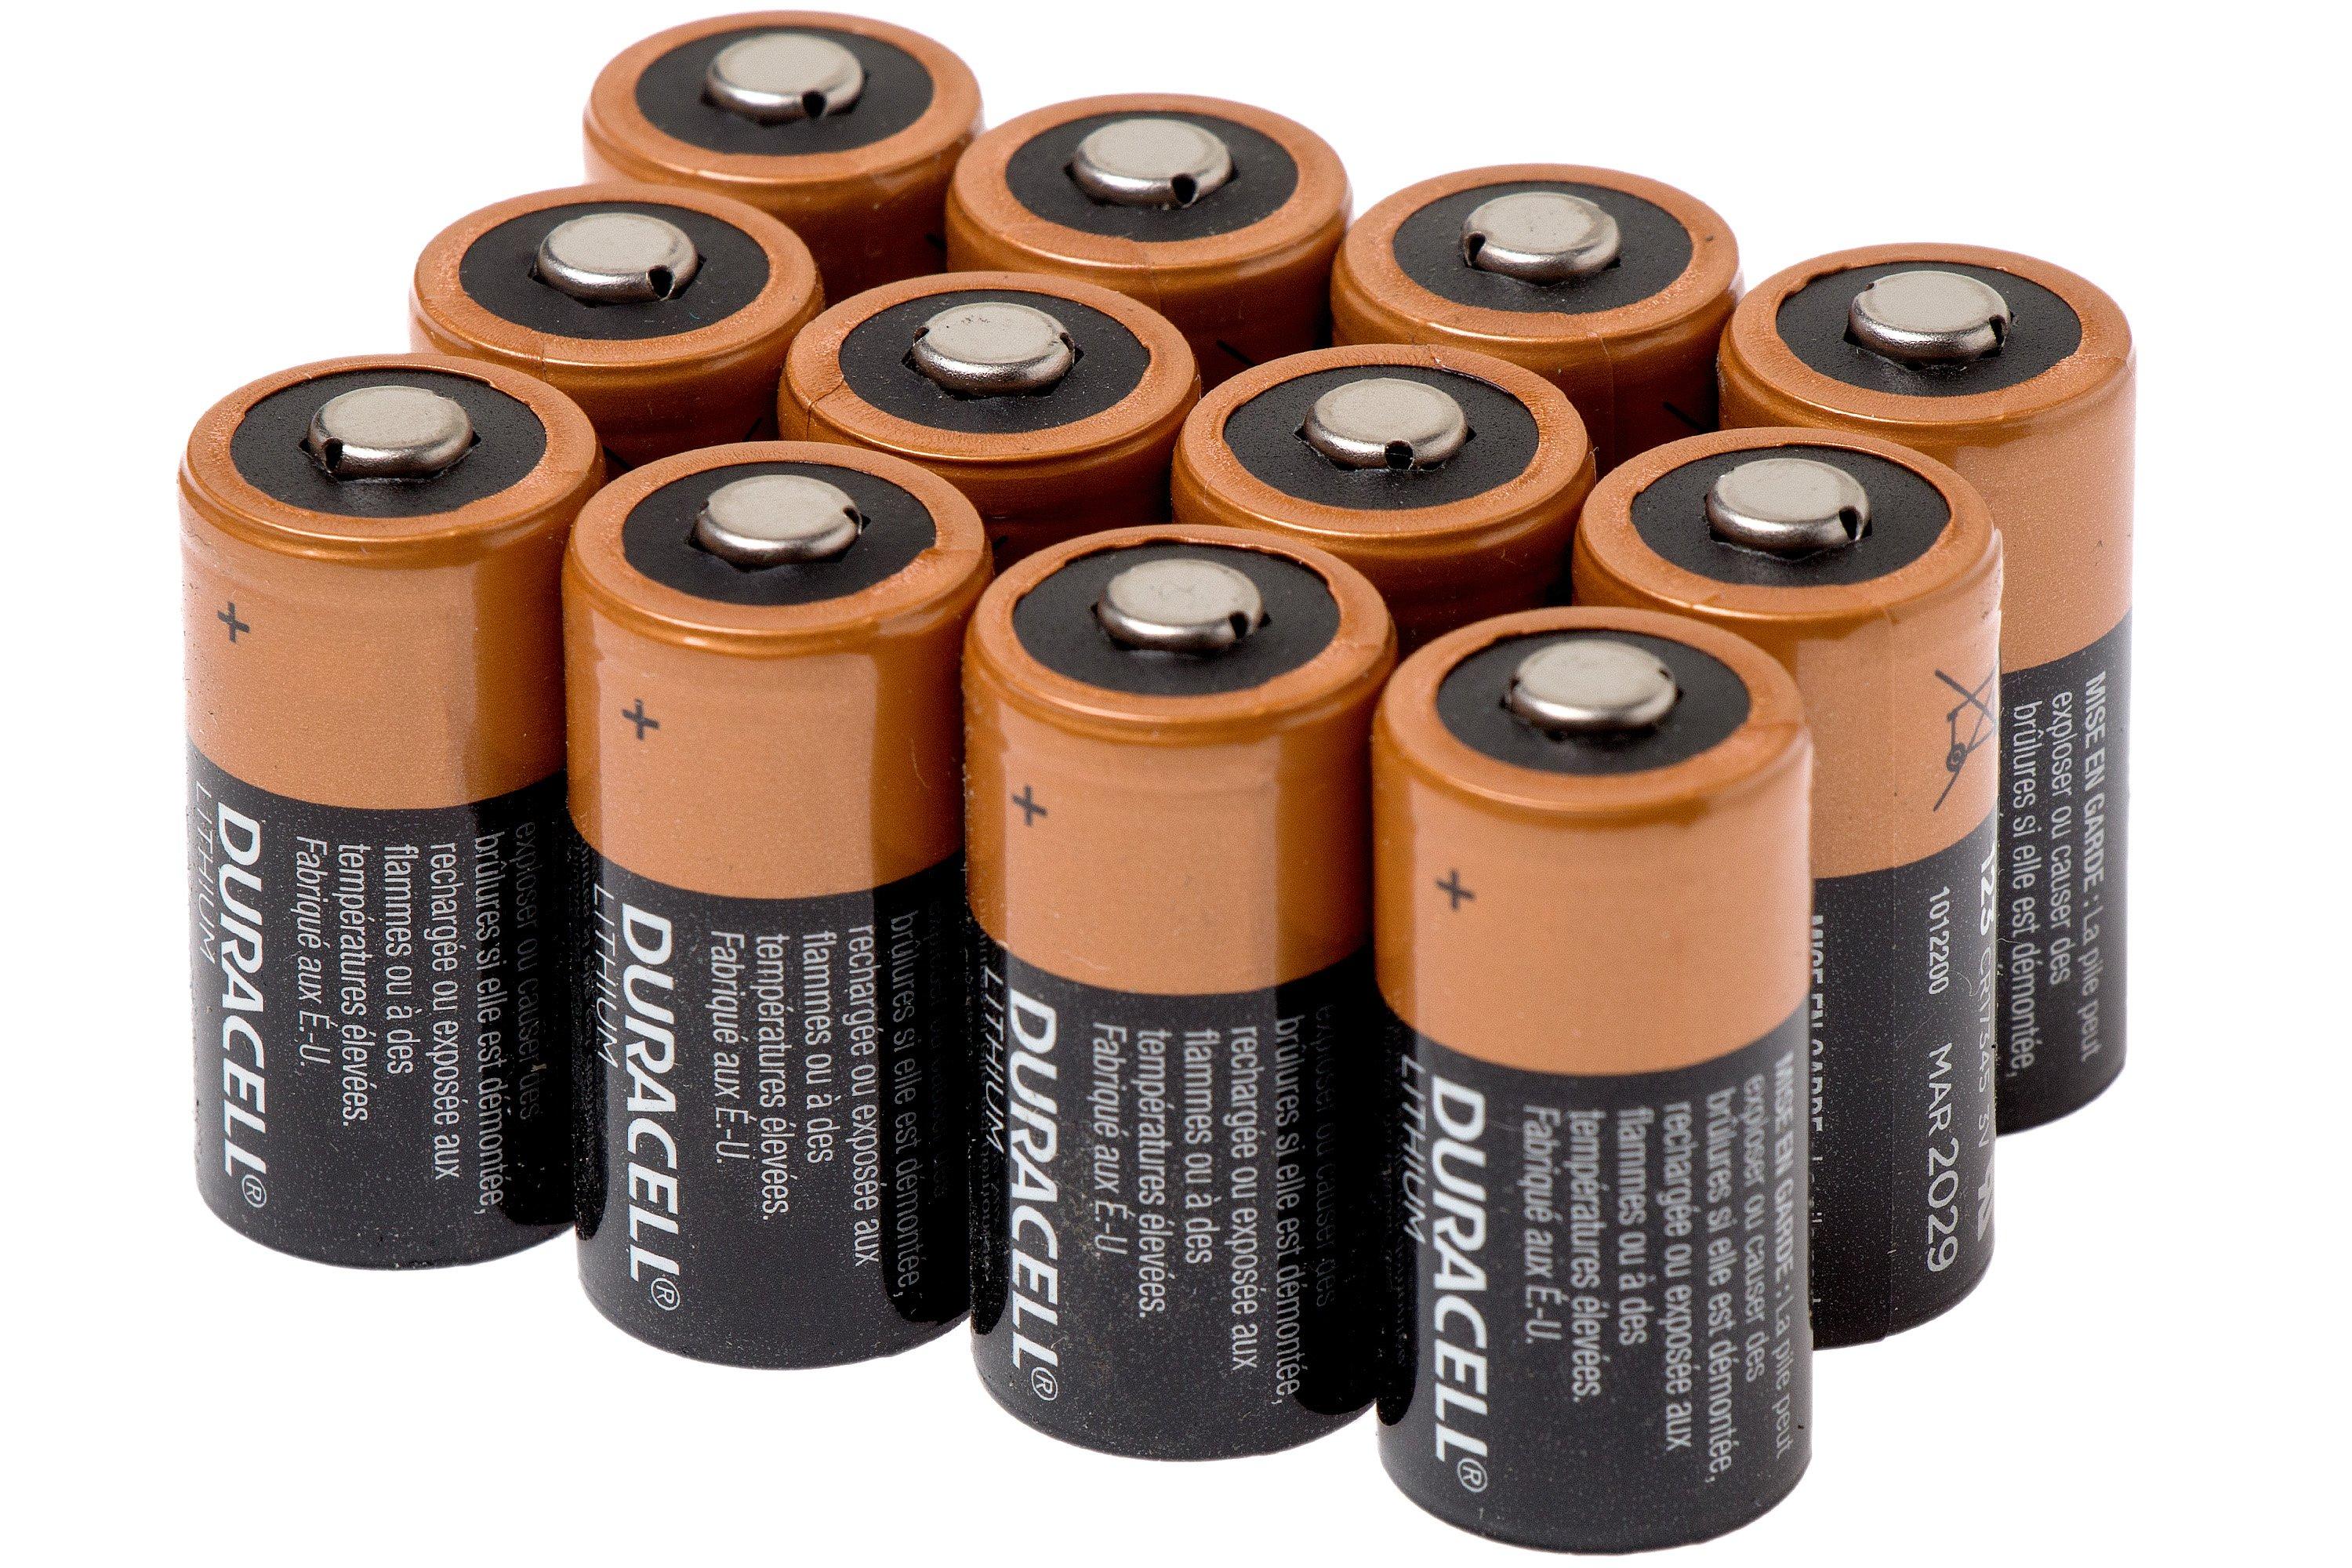 bloeden Gezichtsvermogen oud Duracell CR123A battery, set of 12 pcs. | Advantageously shopping at  Knivesandtools.com